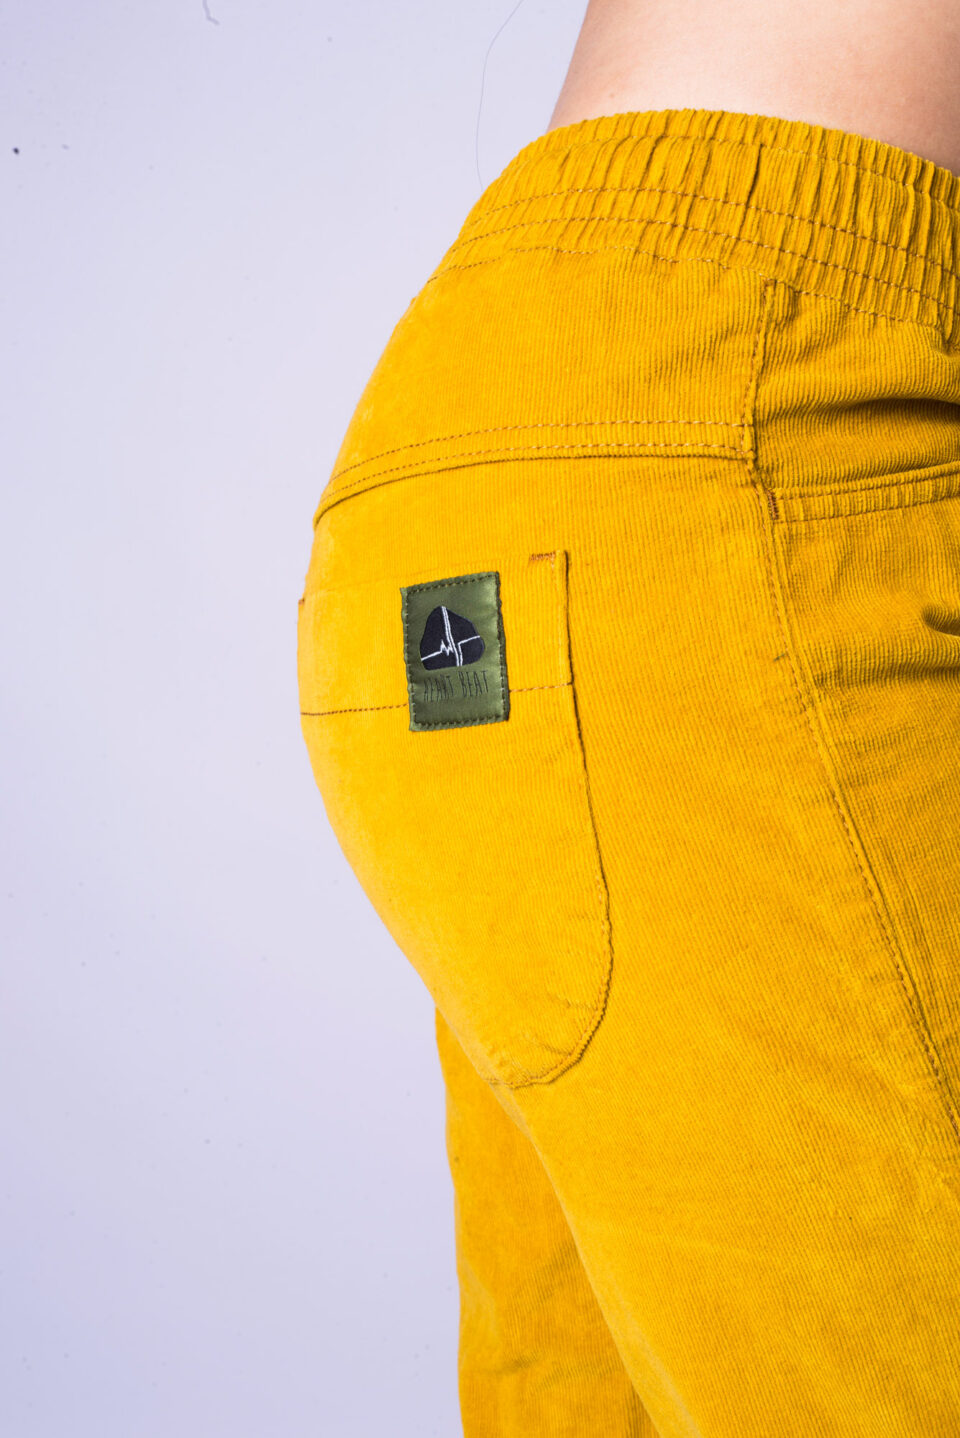 Rocket Pocket corduroy pants - yellow mustard